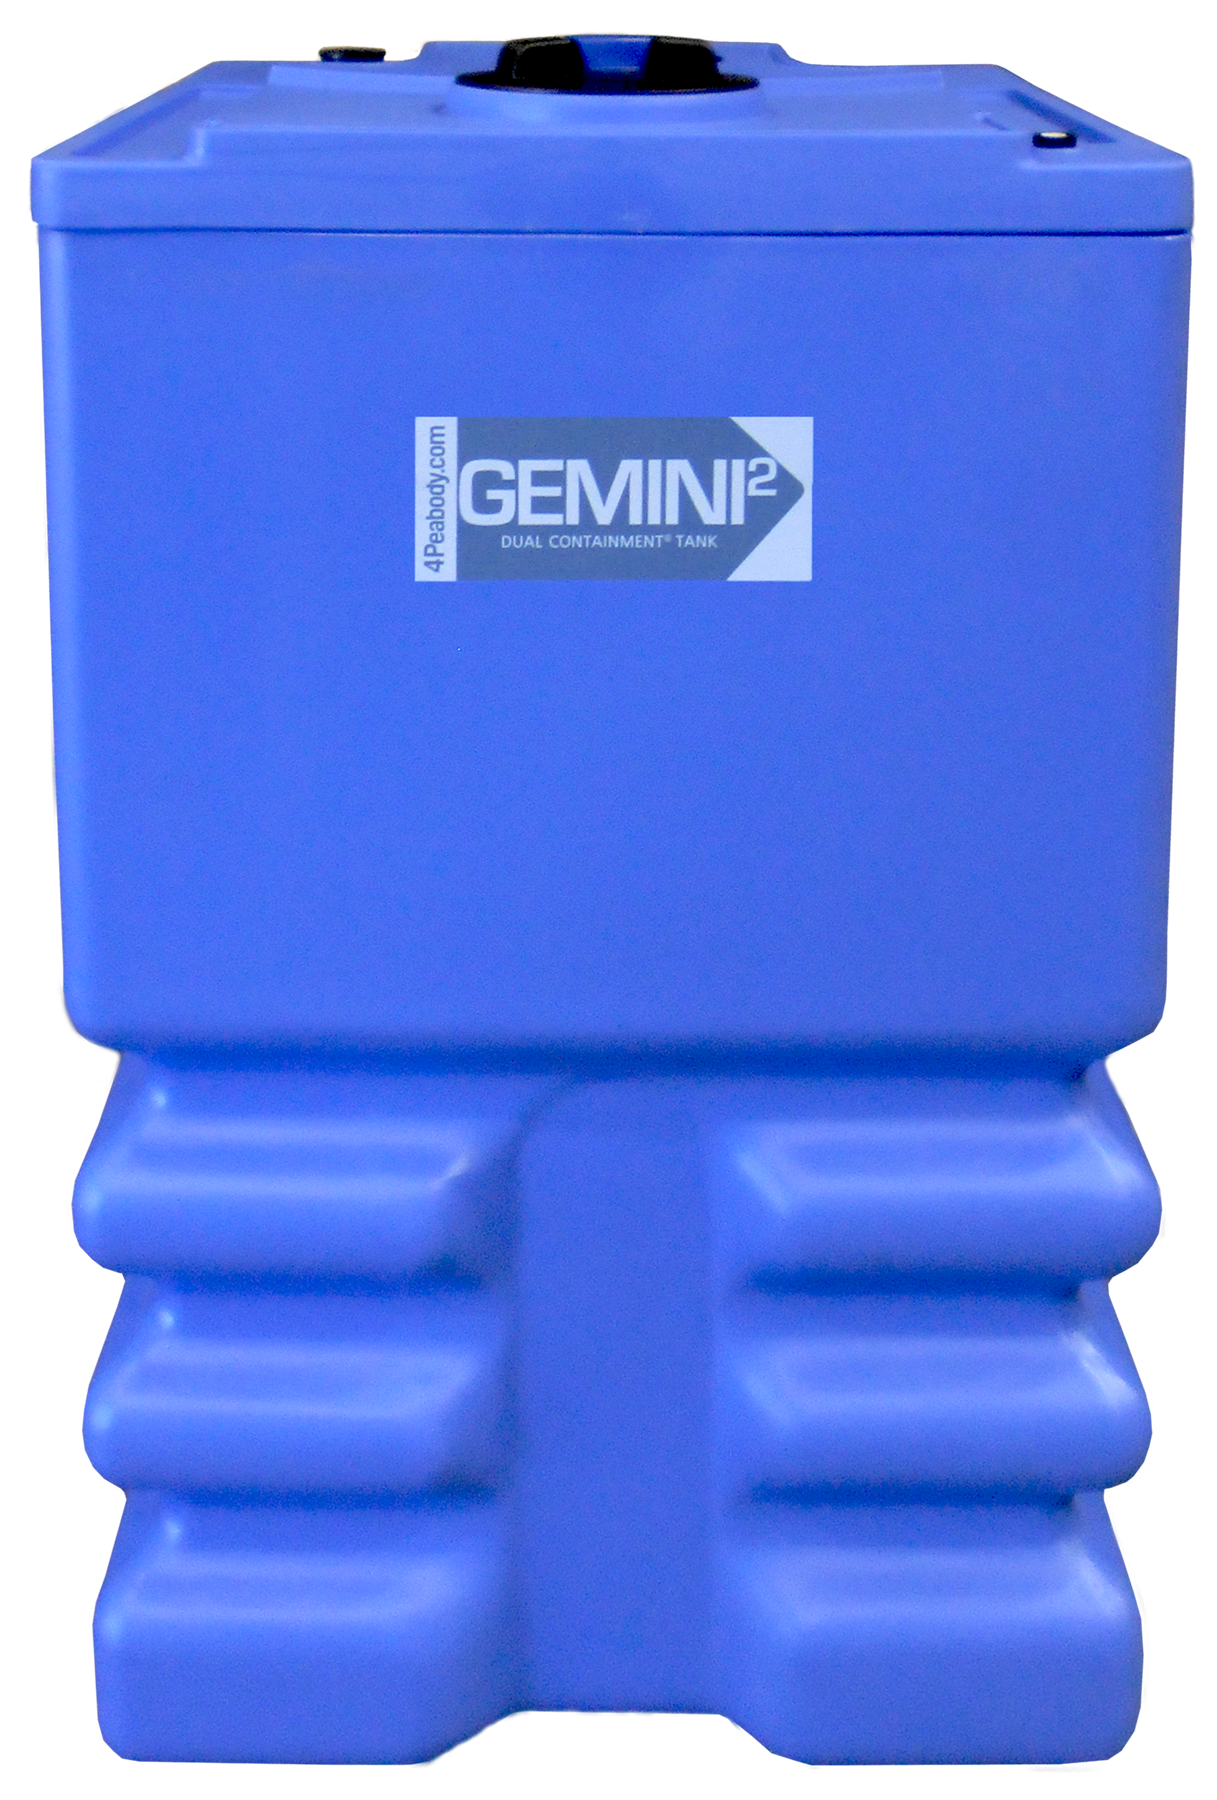 175 Gal Gemini² Dual Containment® Tank - LPE SD 1.5 - Blue - Ribbed